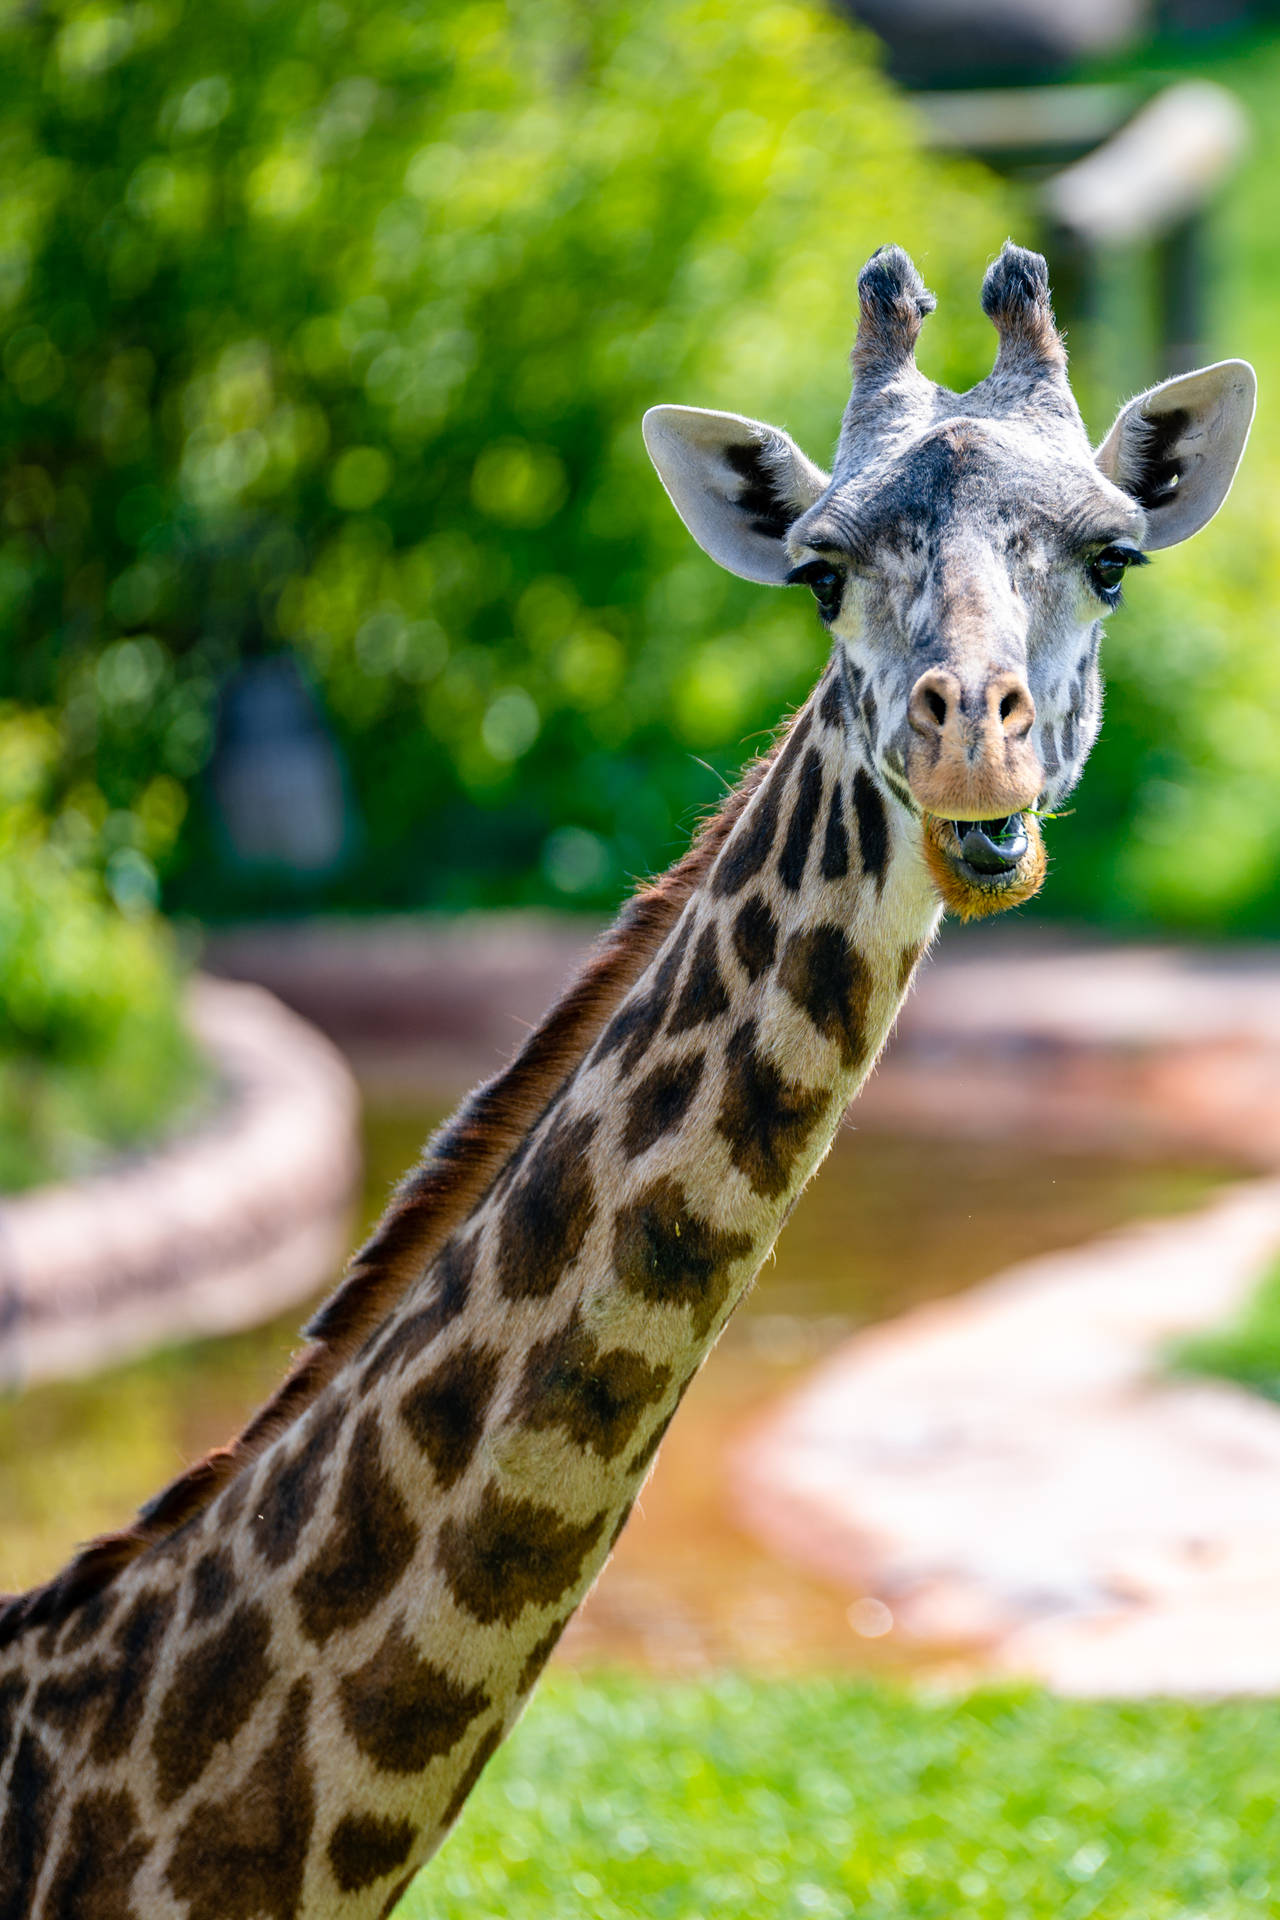 Cool Calm Giraffe Staring